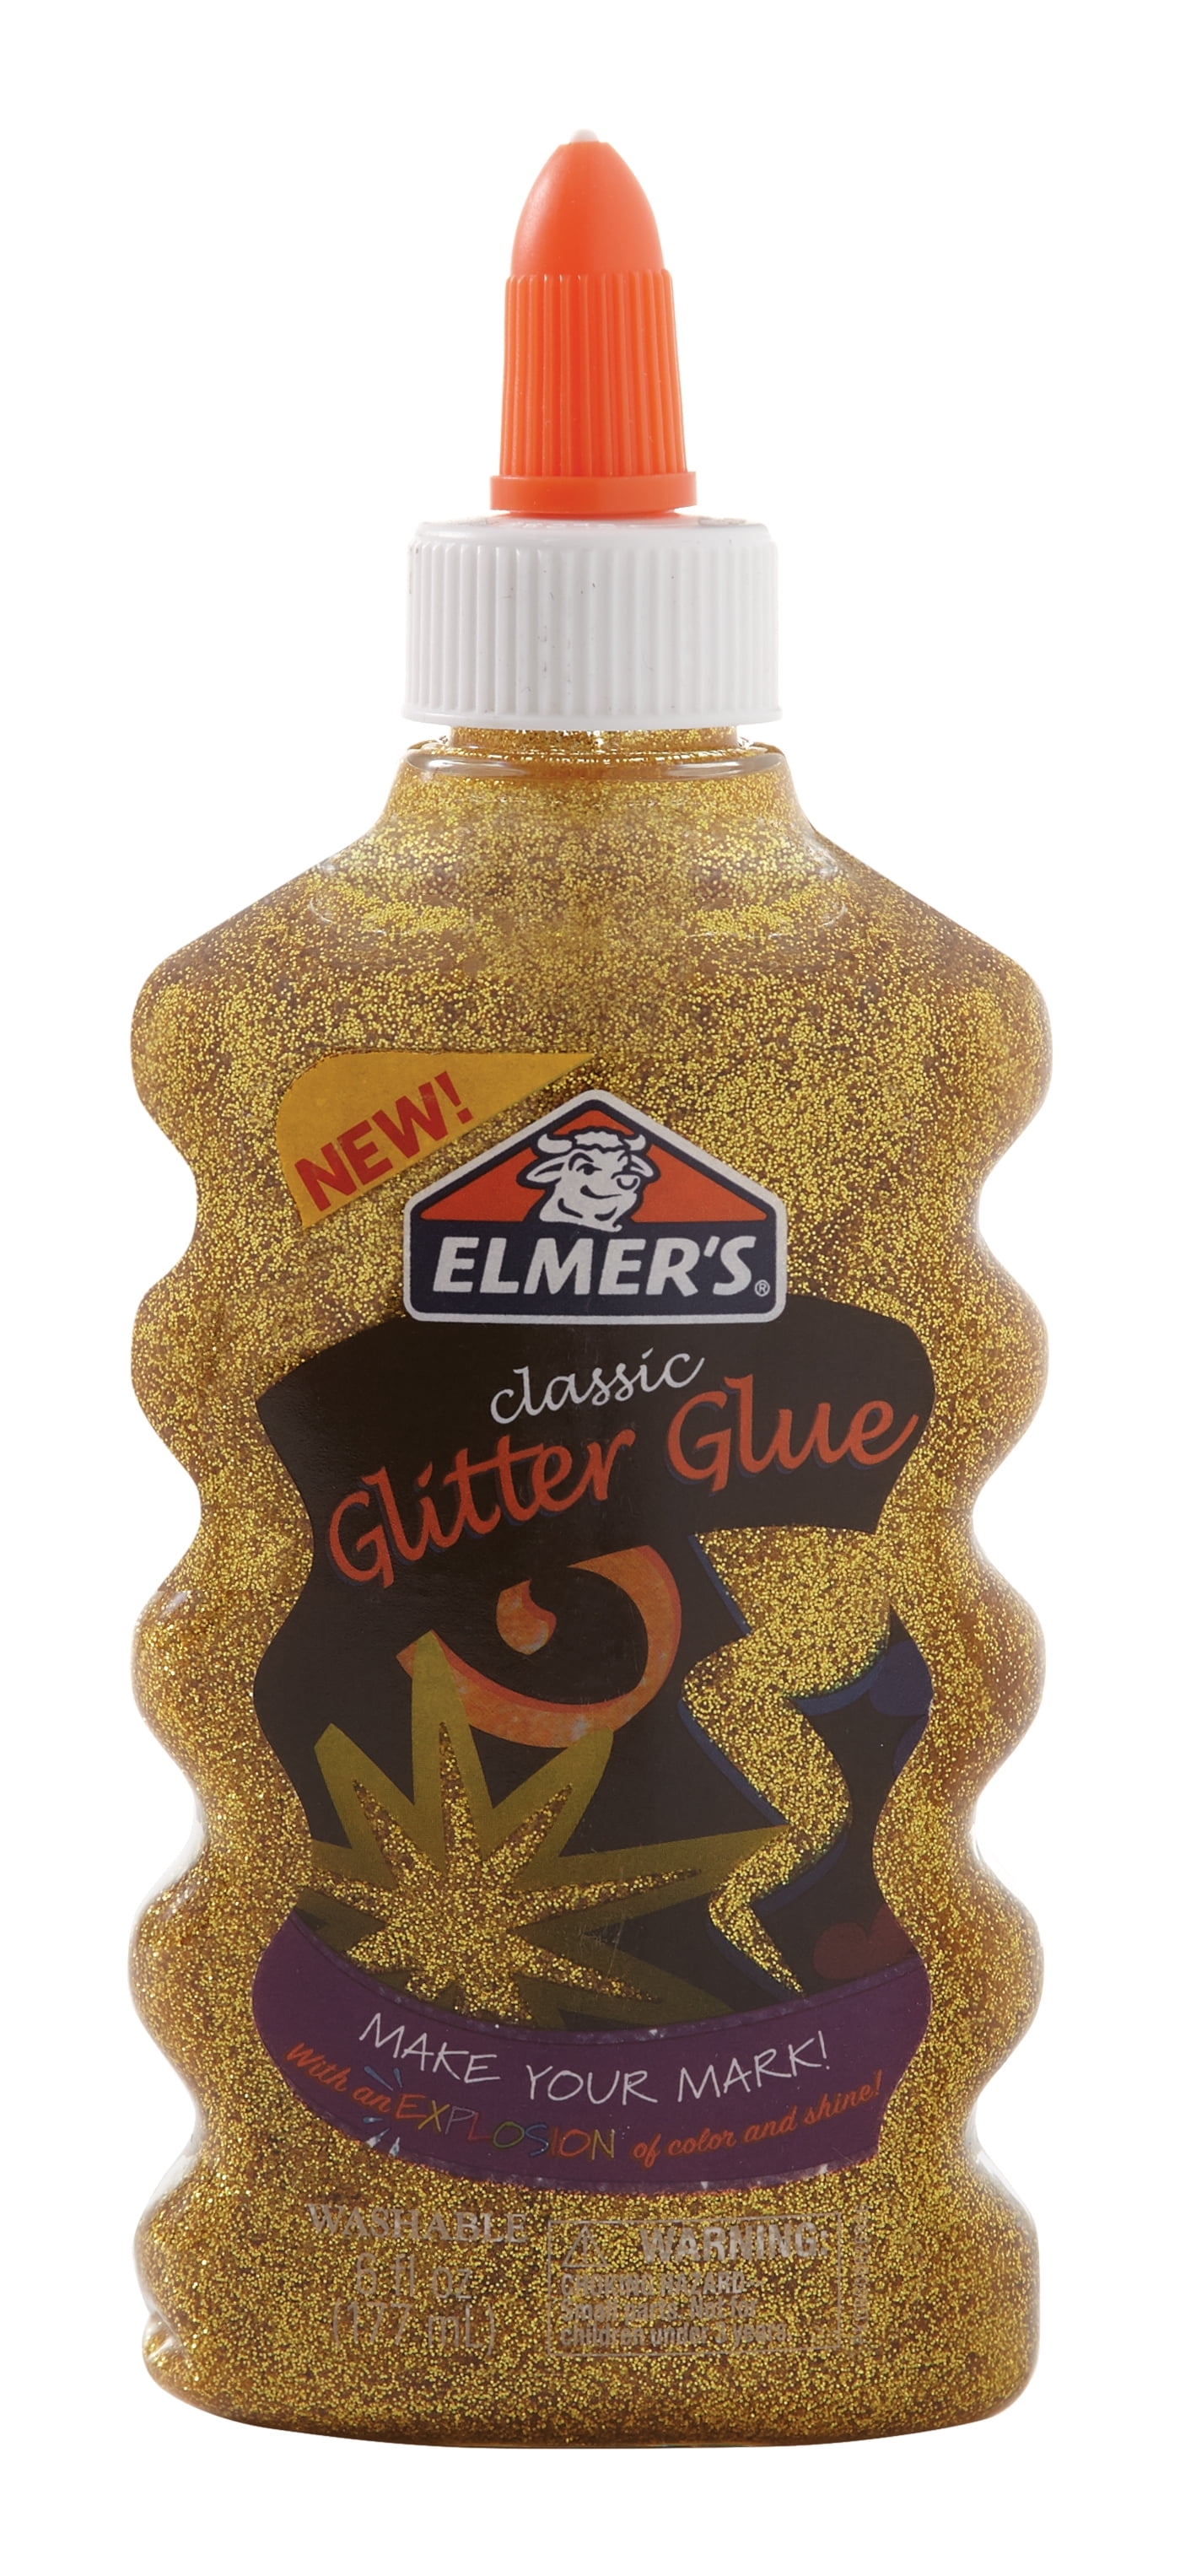 Elmer's Glitter Glue 6oz Black, 1 - Fry's Food Stores